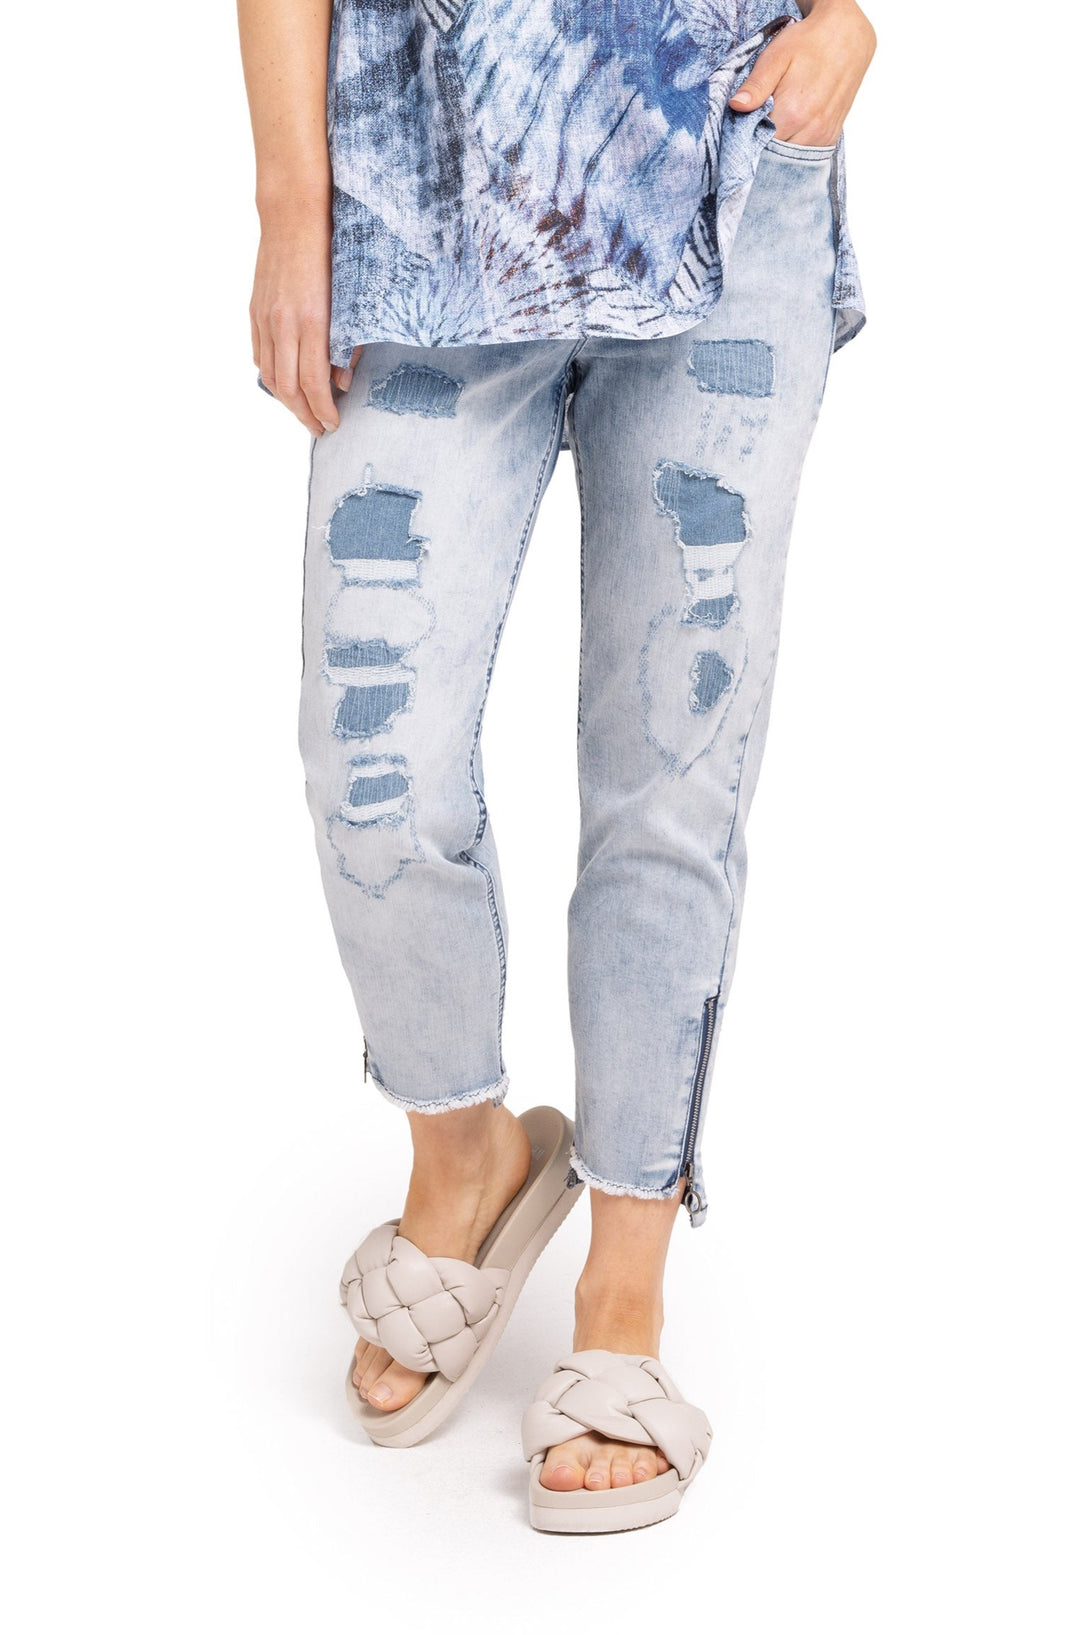 capri jeansbroek in trendy uitvoering - doris streich - 855195 - grote maten - dameskleding - kledingwinkel - herent - leuven